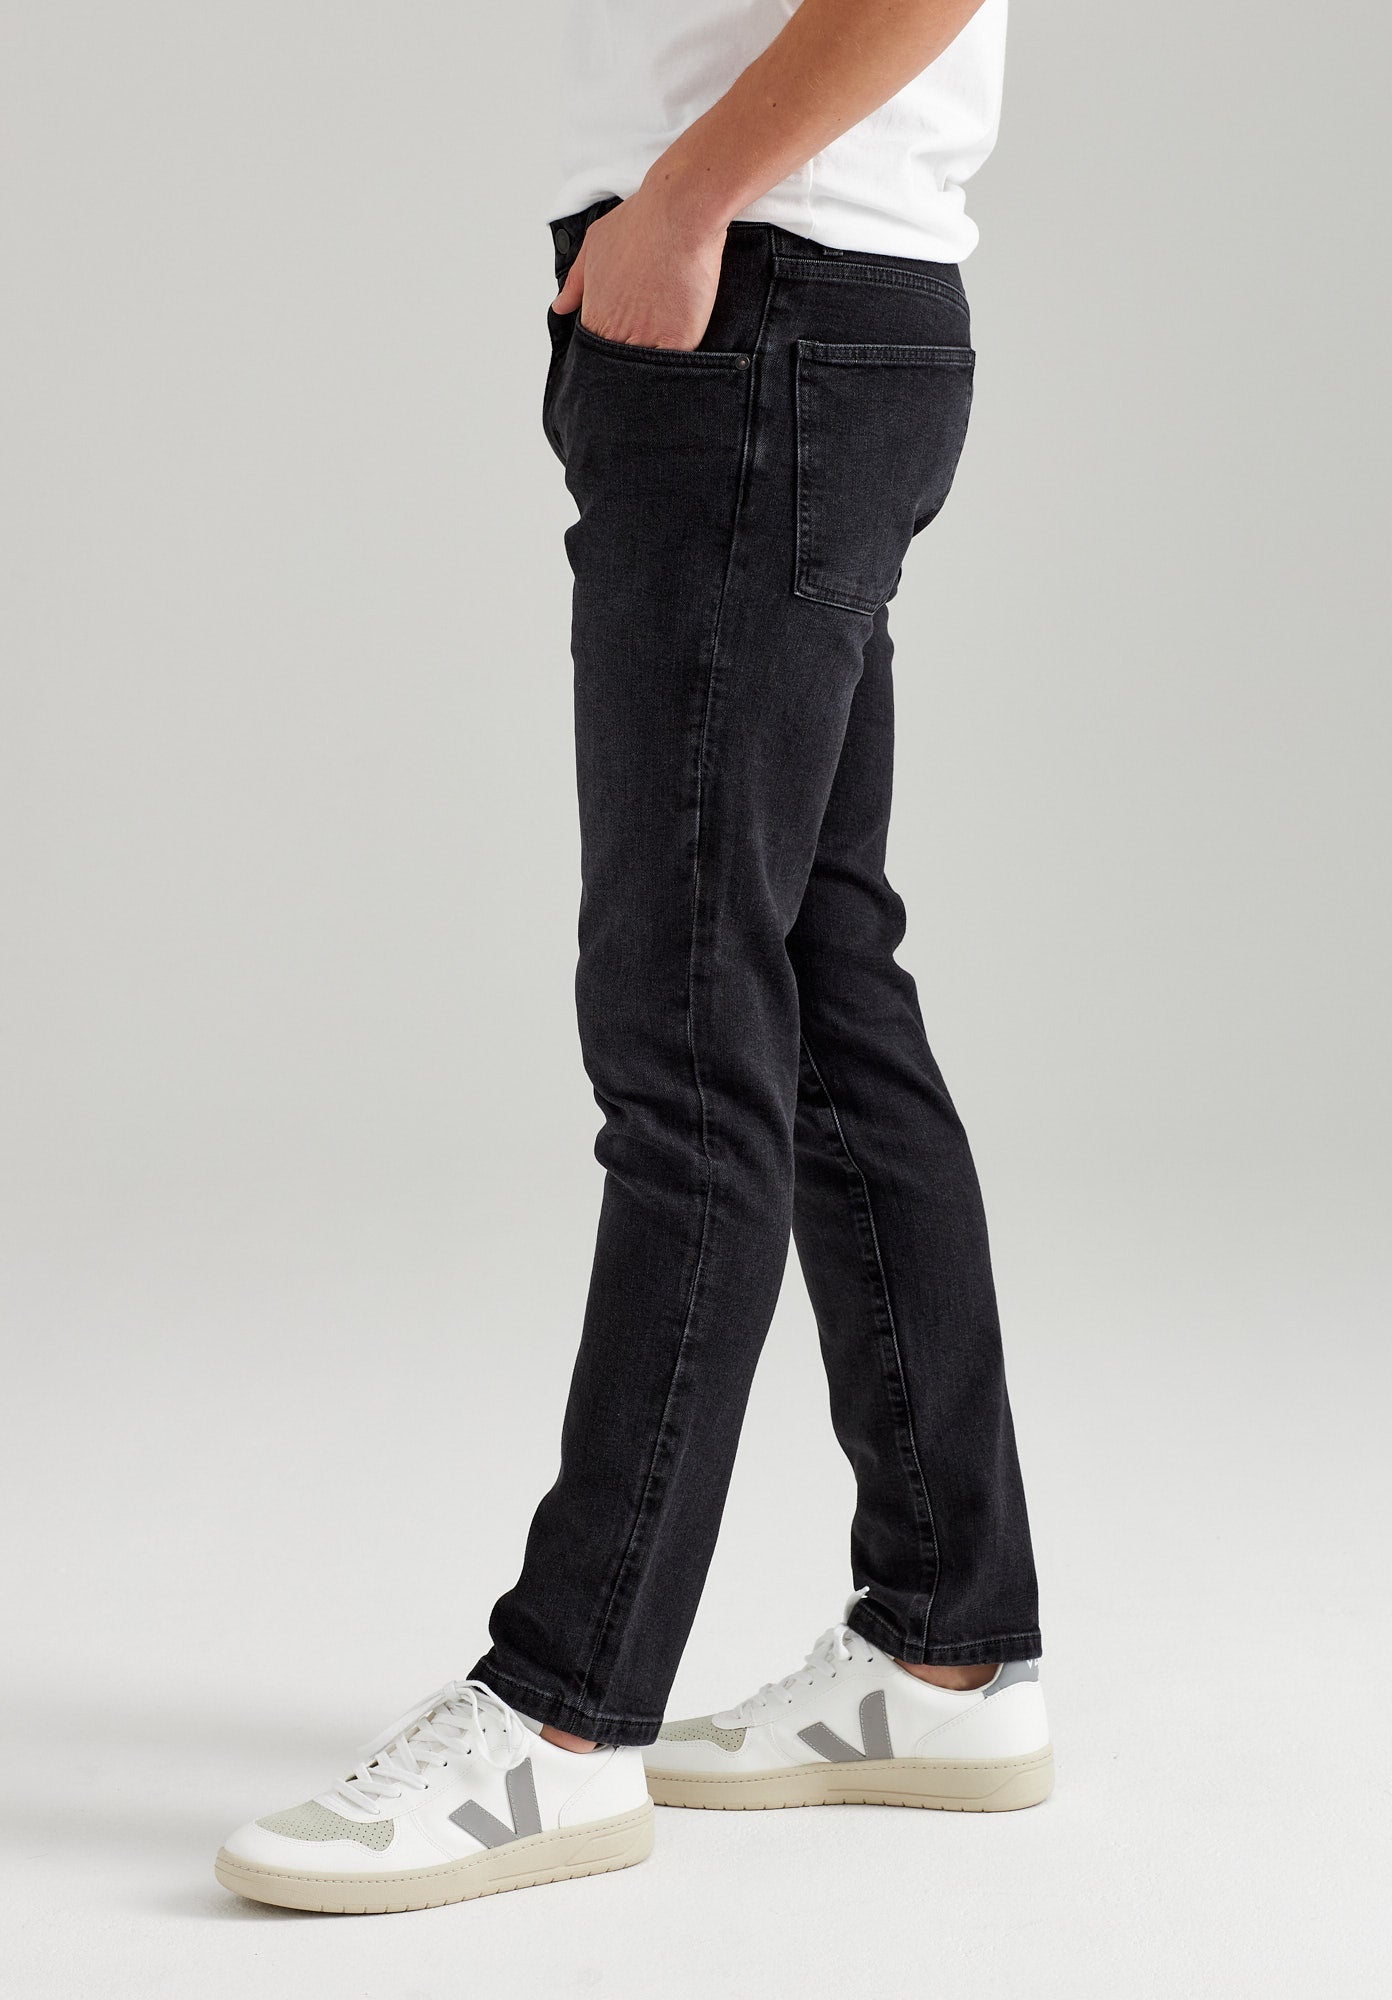 Black trousers TT204 made of organic cotton from Thokkthokk